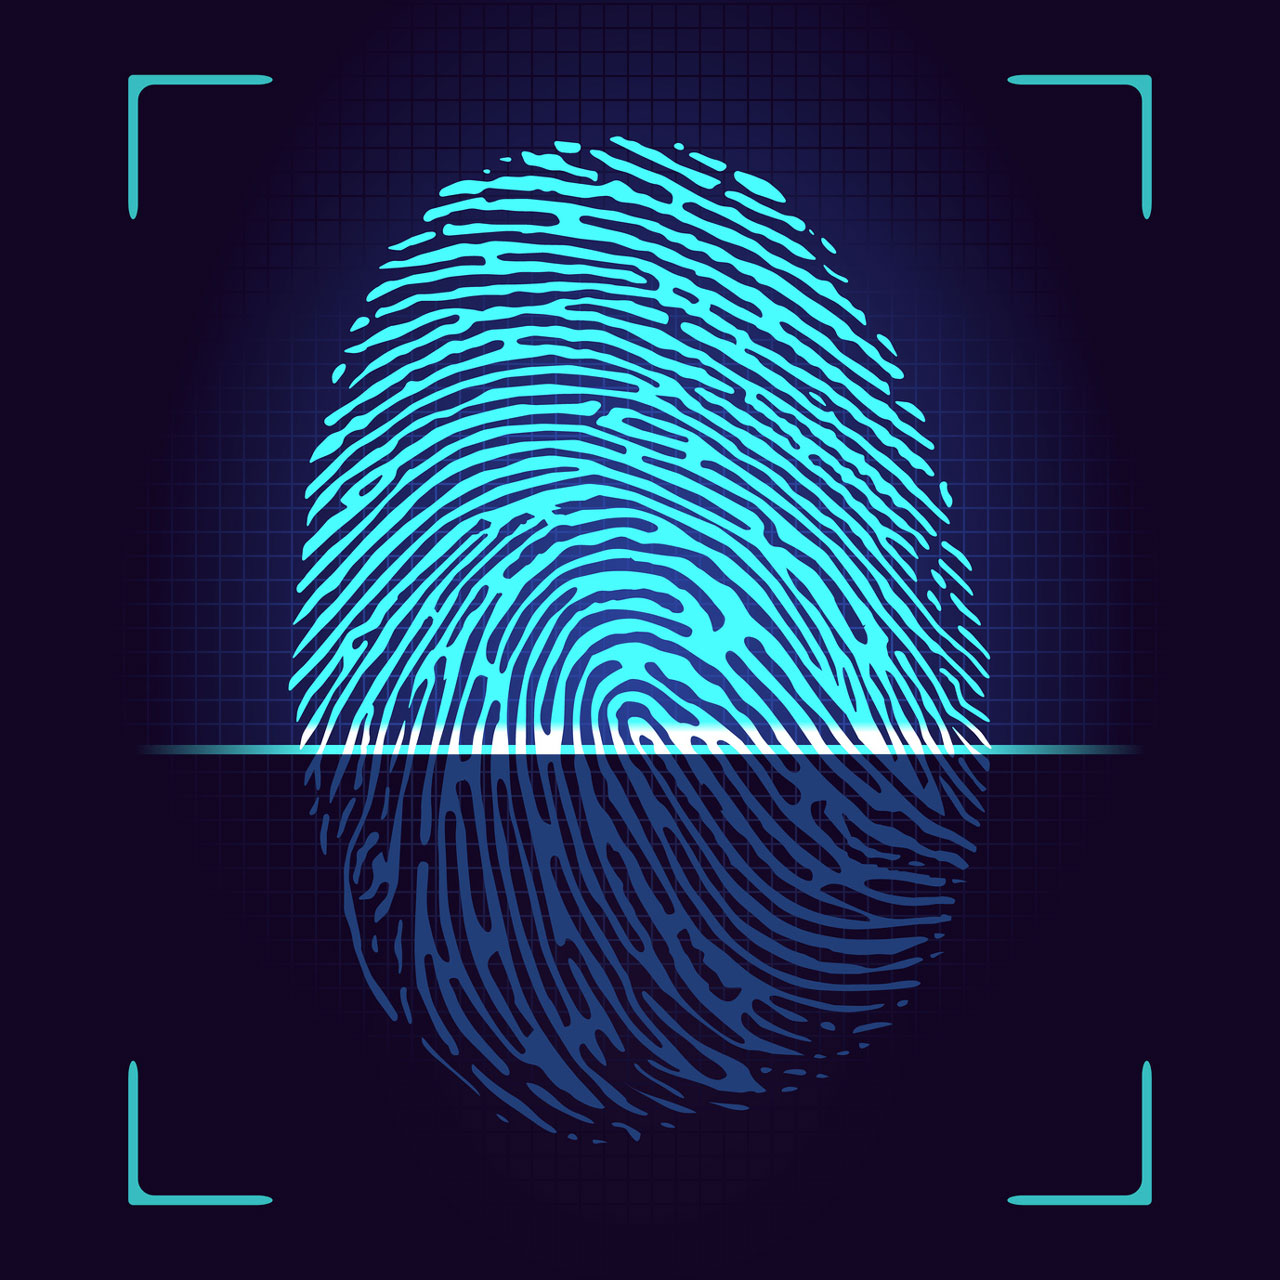 Biometric security flaws